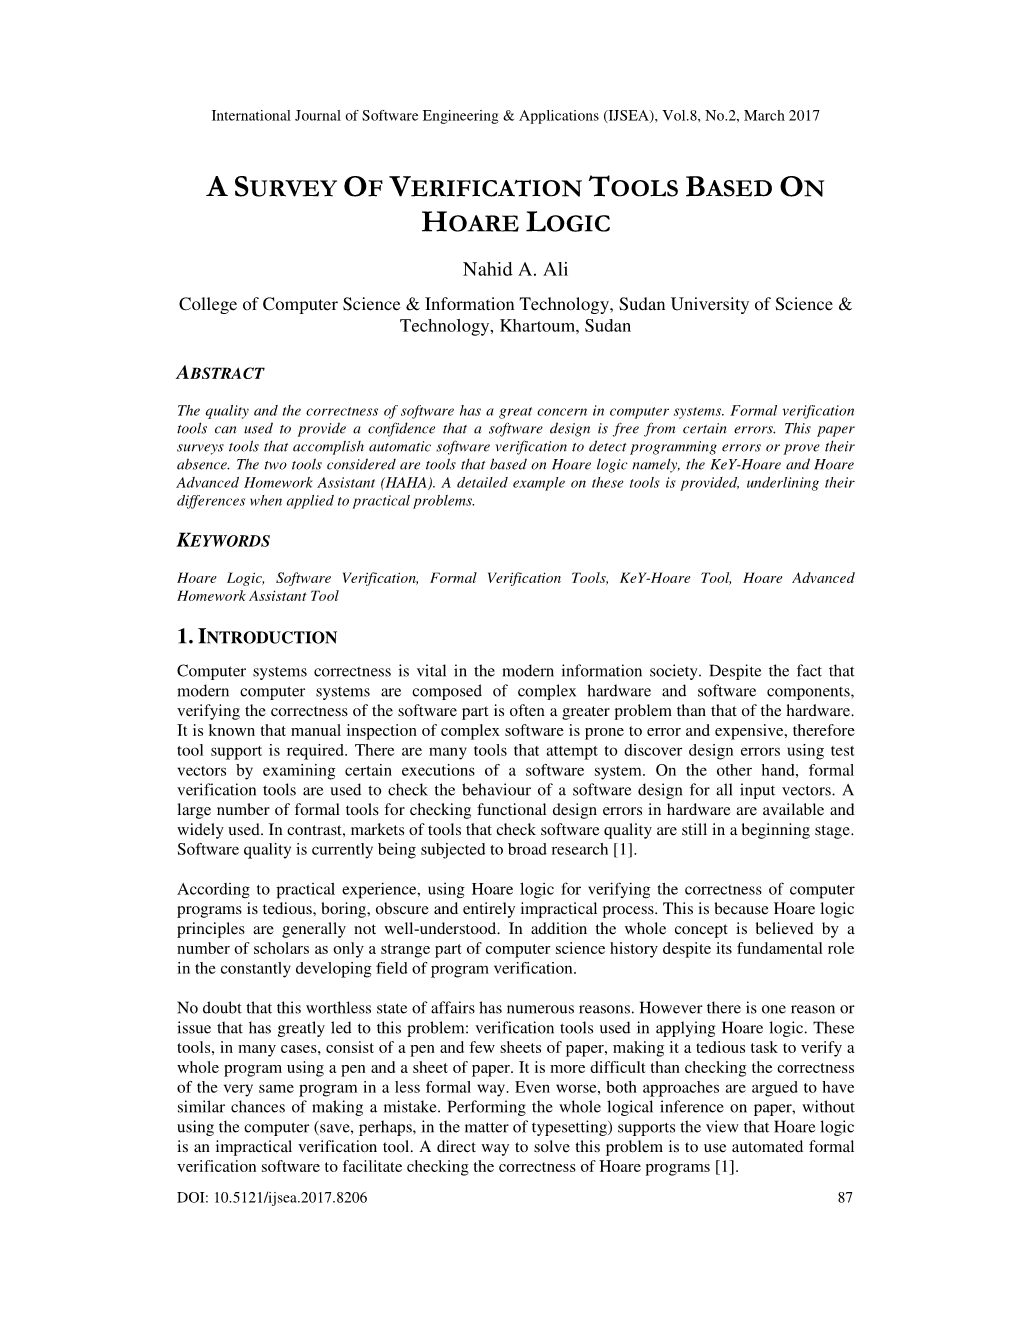 A Survey of Verification Tools Based on Hoare Logic